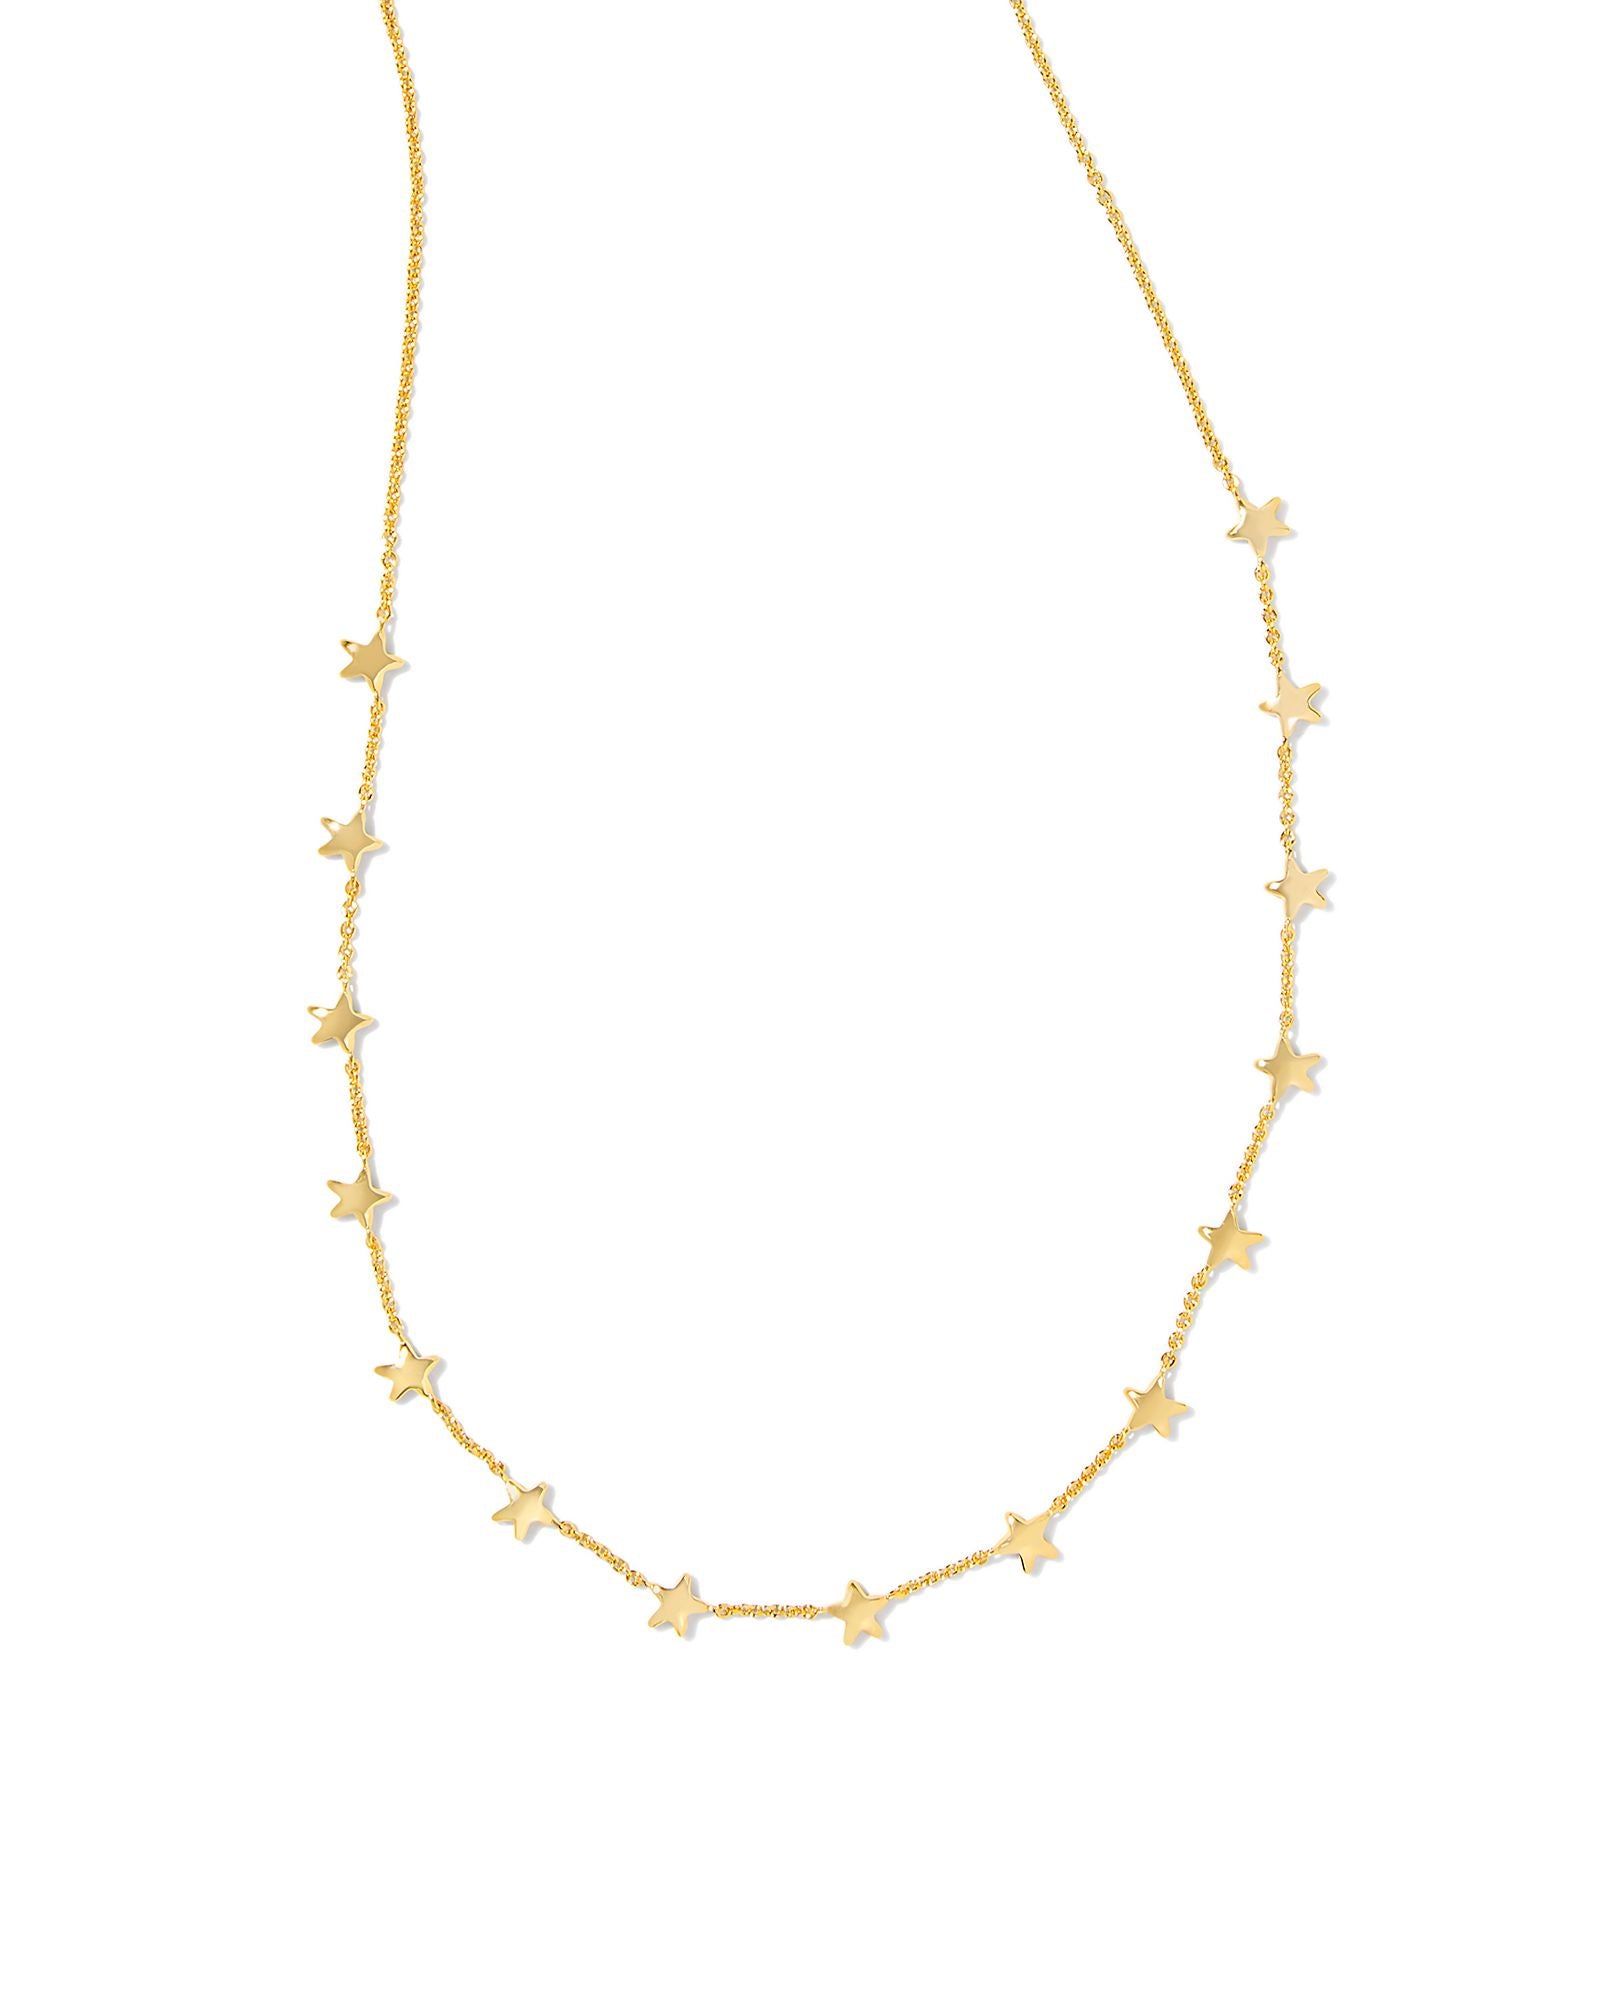 Sierra Star Strand Necklace in Gold